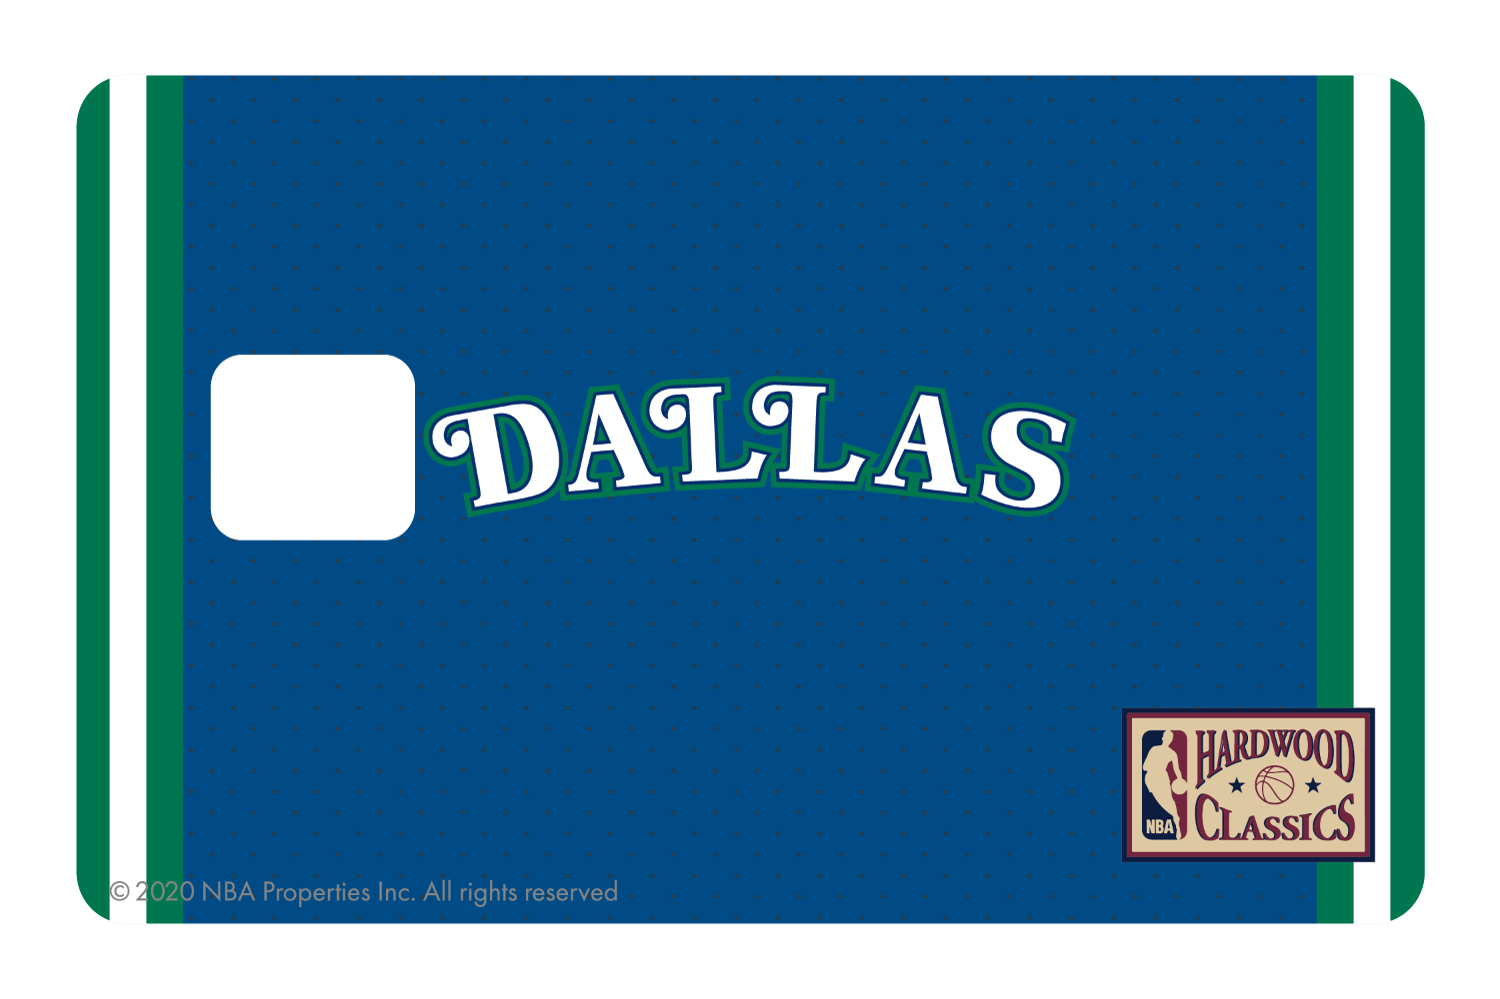 Dallas Mavericks: Away Hardwood Classics